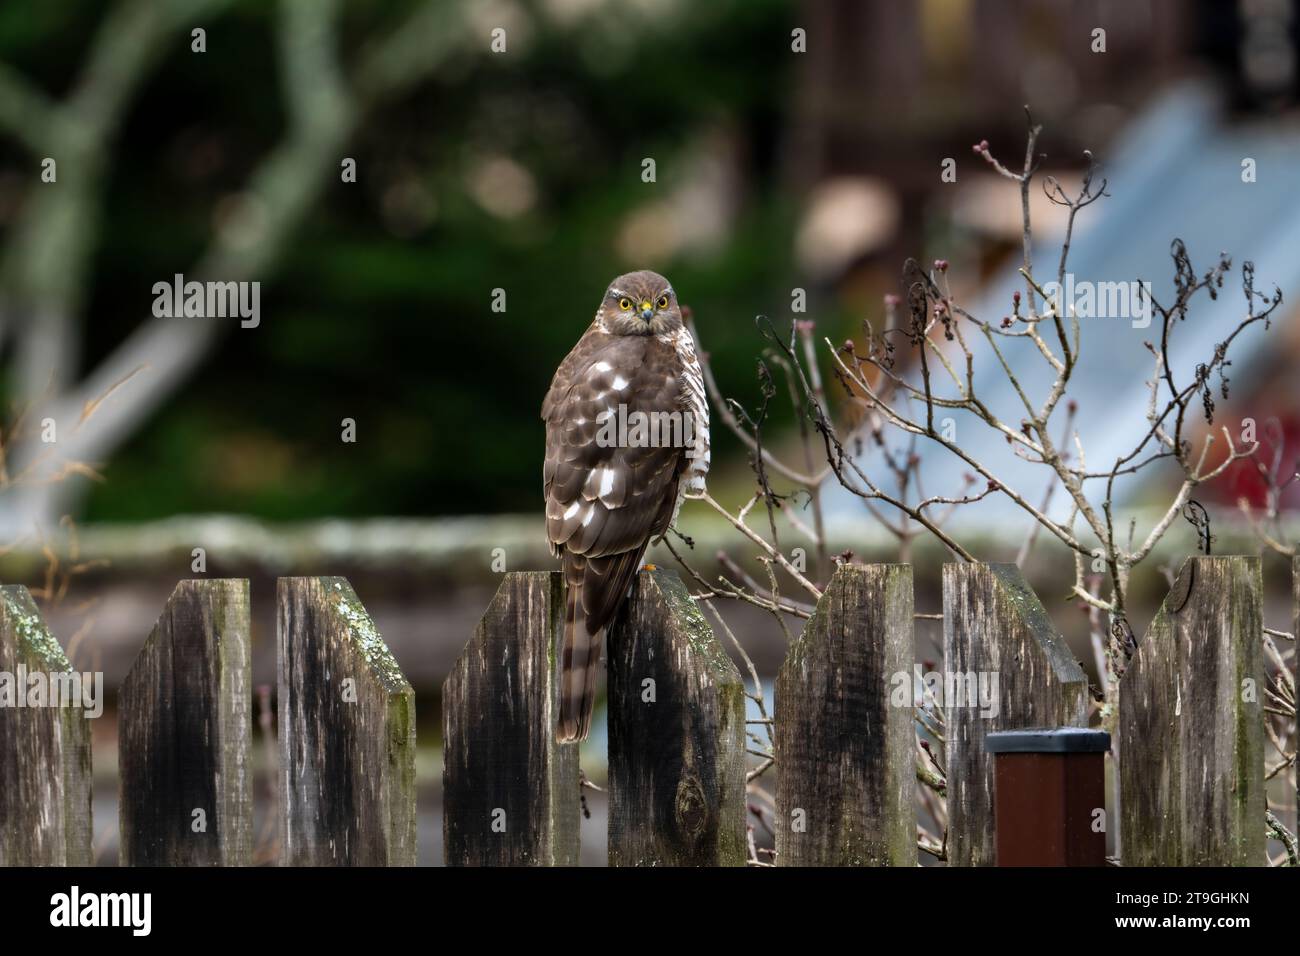 Accipiter nisus Familie Accipitridae Gattung Accipiter Eurasian Sparrowhawk wilde Natur Raubvogel Fotografie, Bild, Tapete Stockfoto